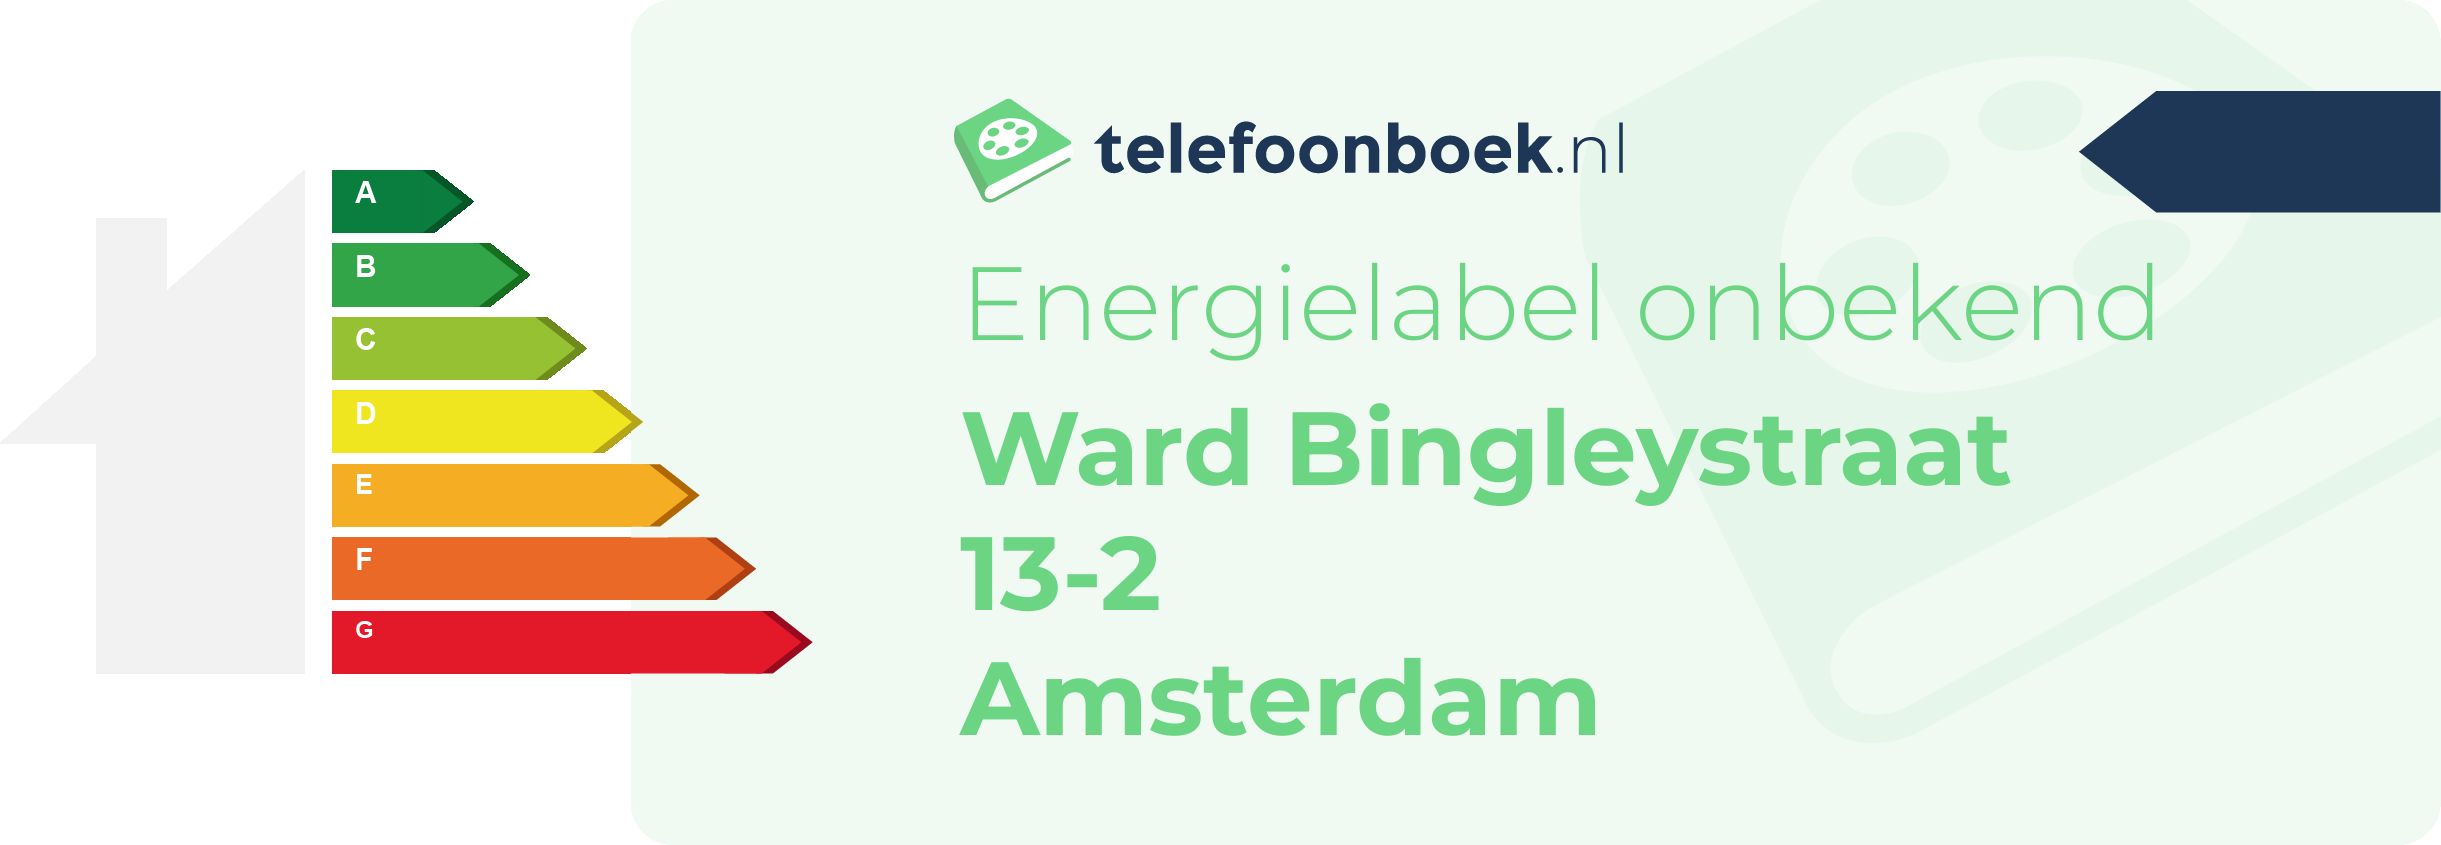 Energielabel Ward Bingleystraat 13-2 Amsterdam